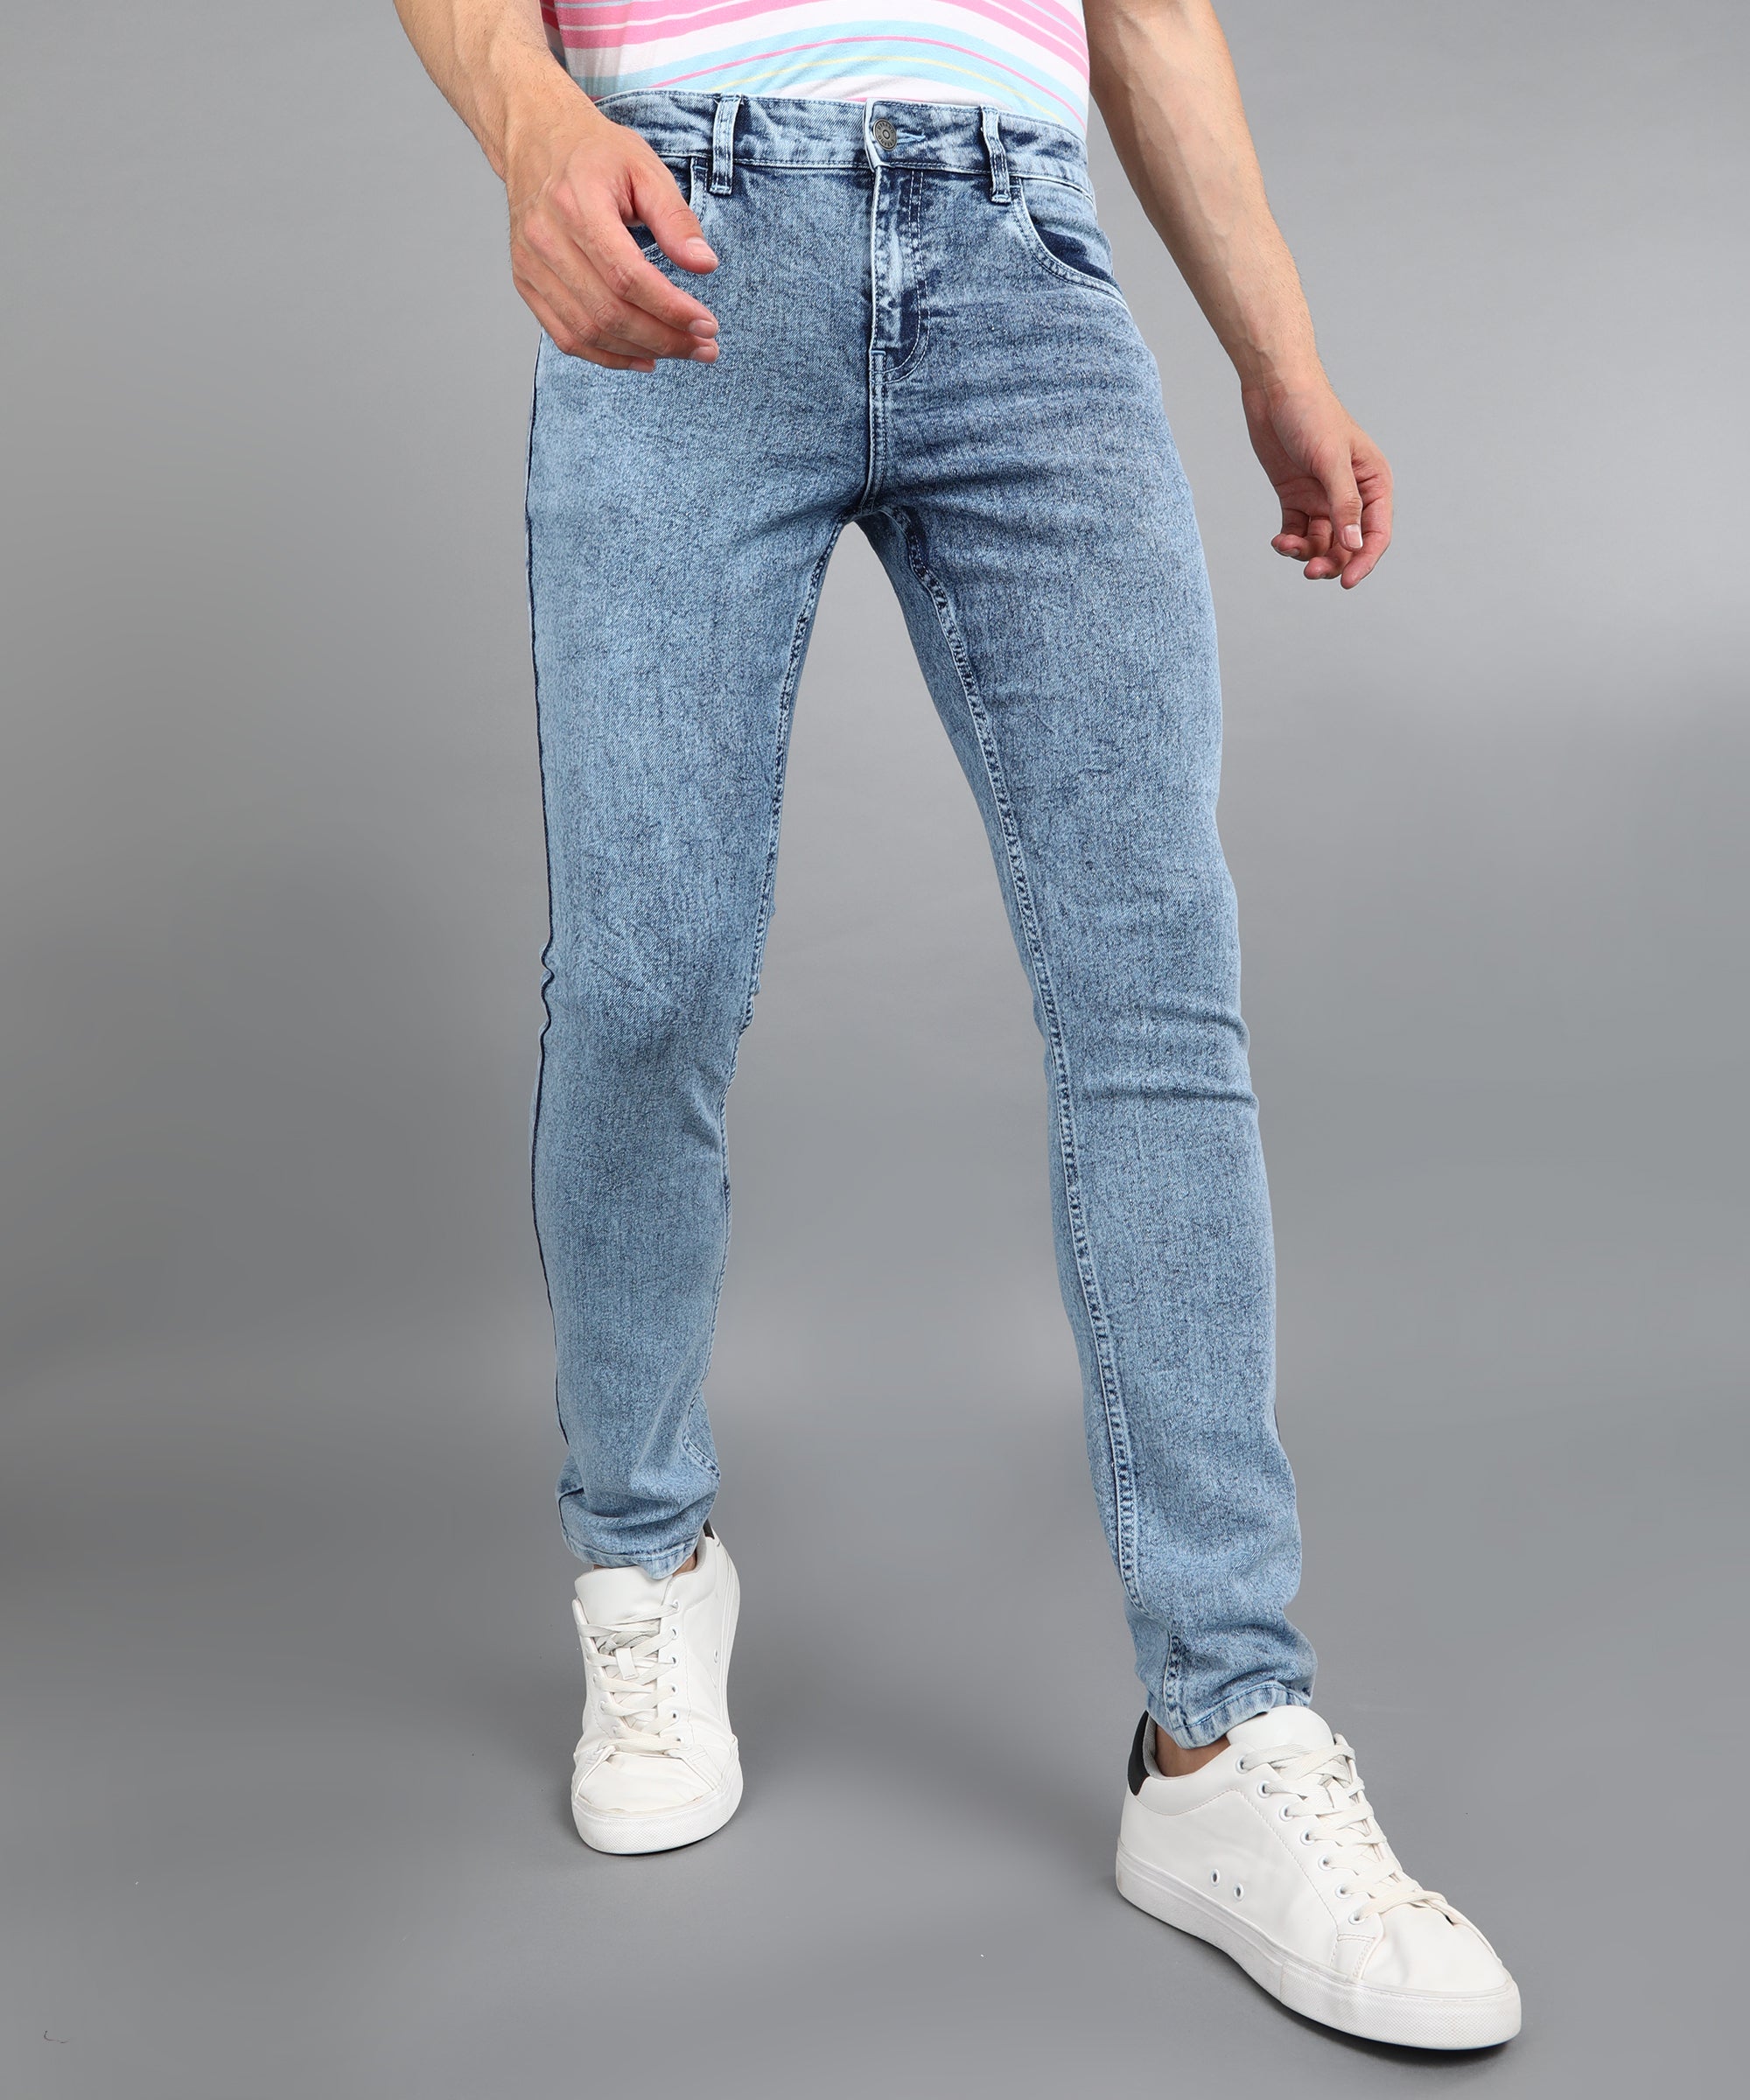 Men's Ice Blue Regular Fit Washed Jeans Stretchable